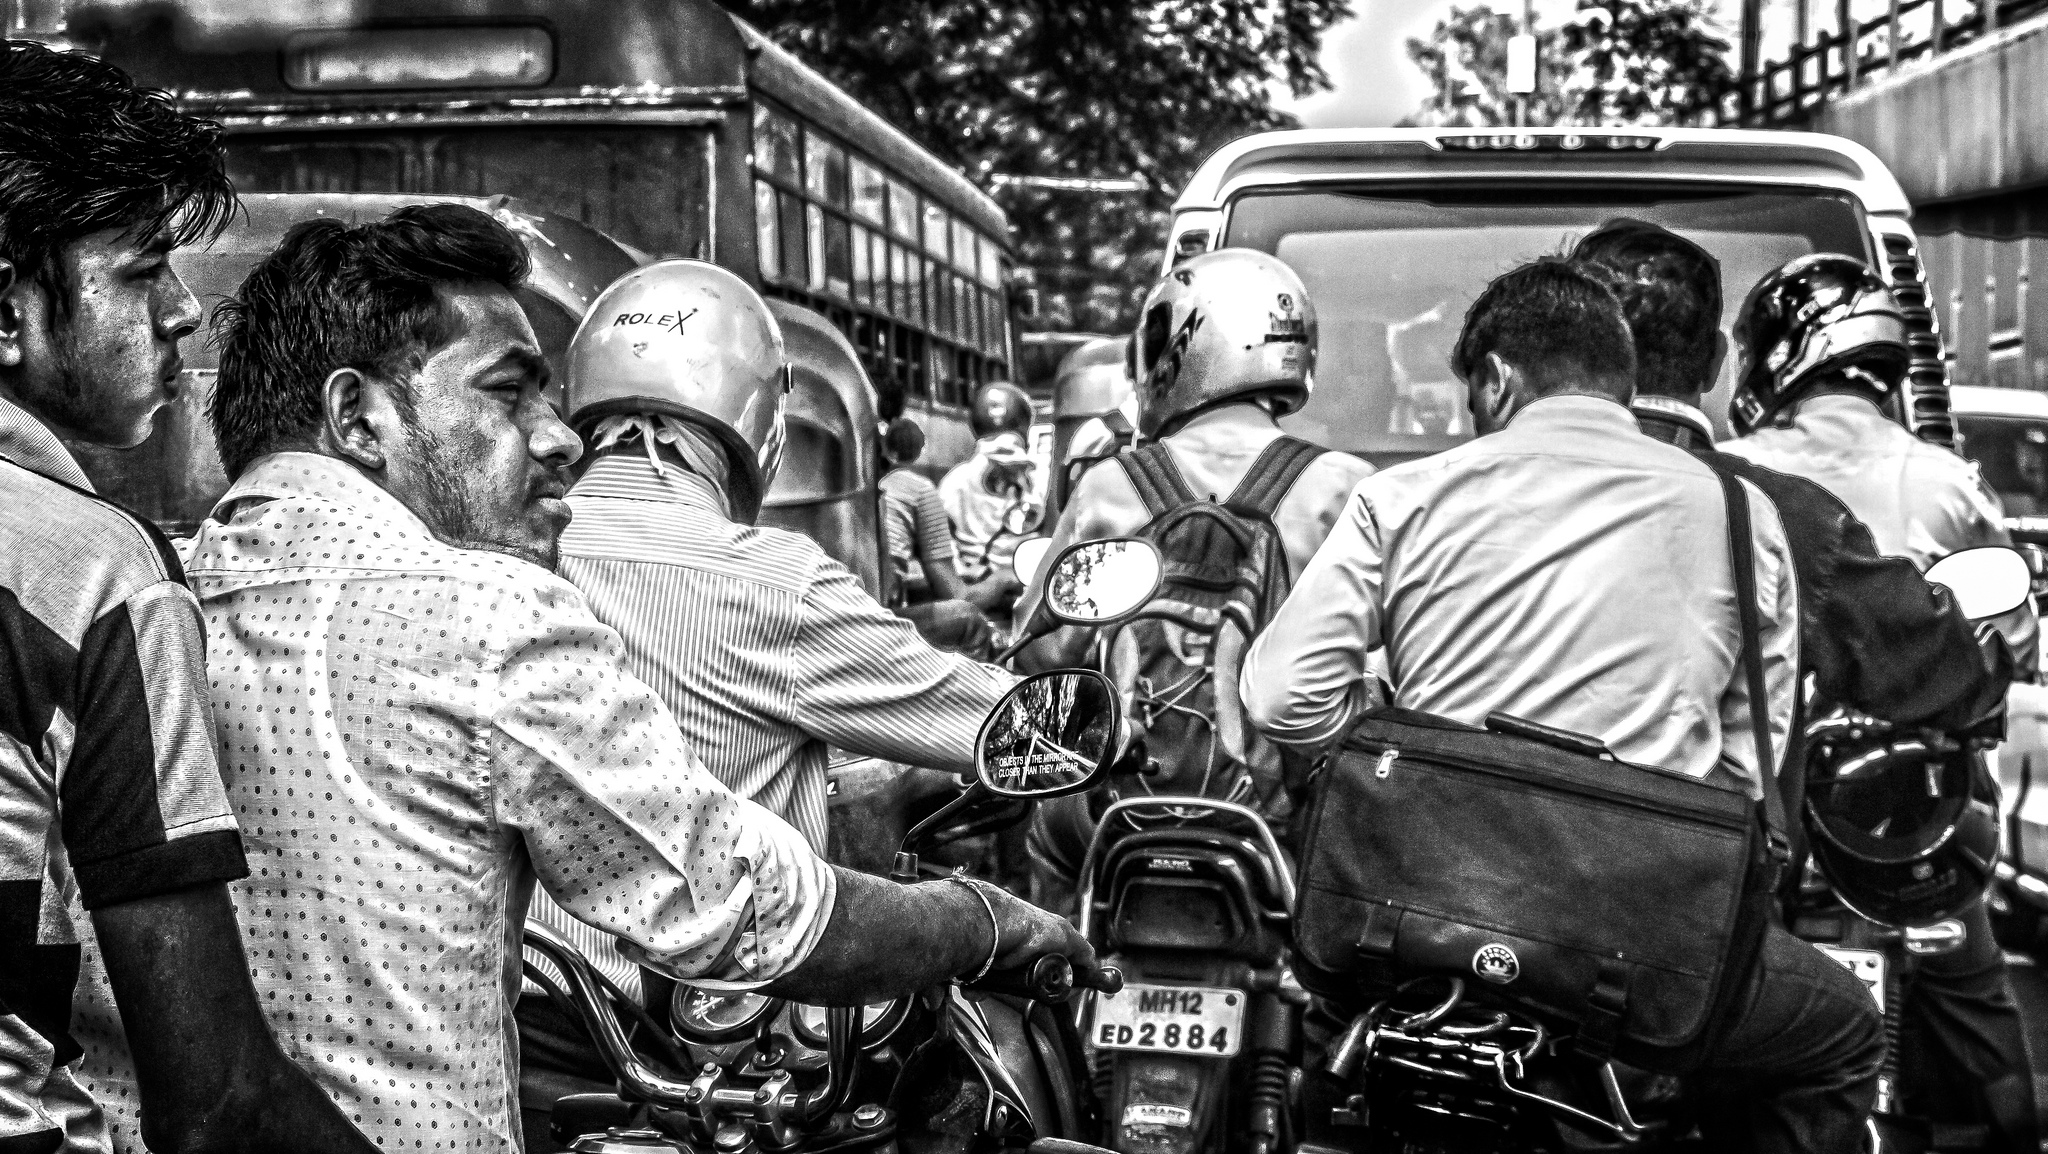 Pune rush hour, by Ian D. Keating